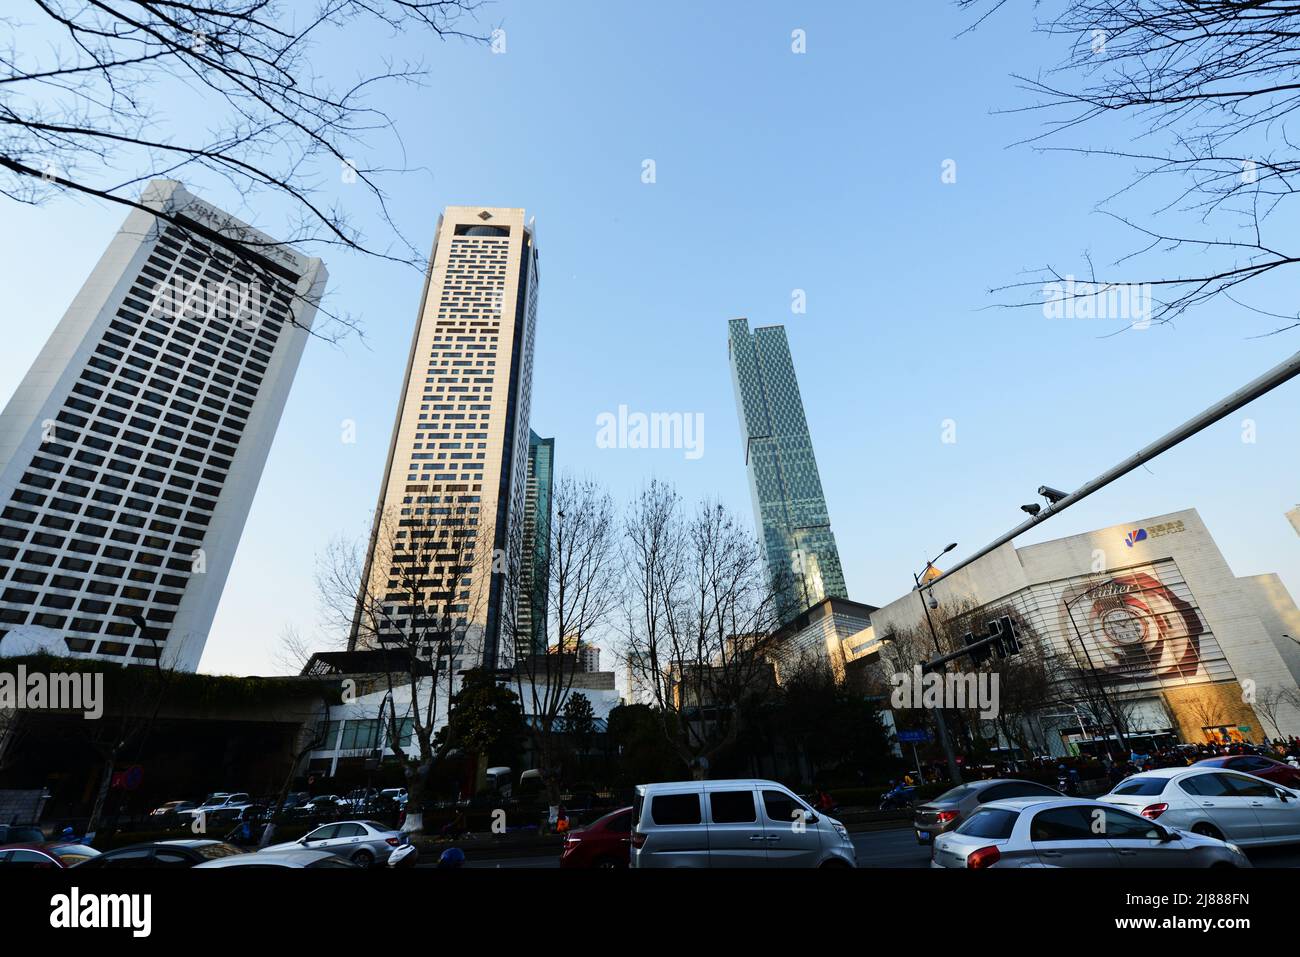 Modern skyscrapers dominate the skyline of Xinjiekou in downtown Nanjing, China. Stock Photo